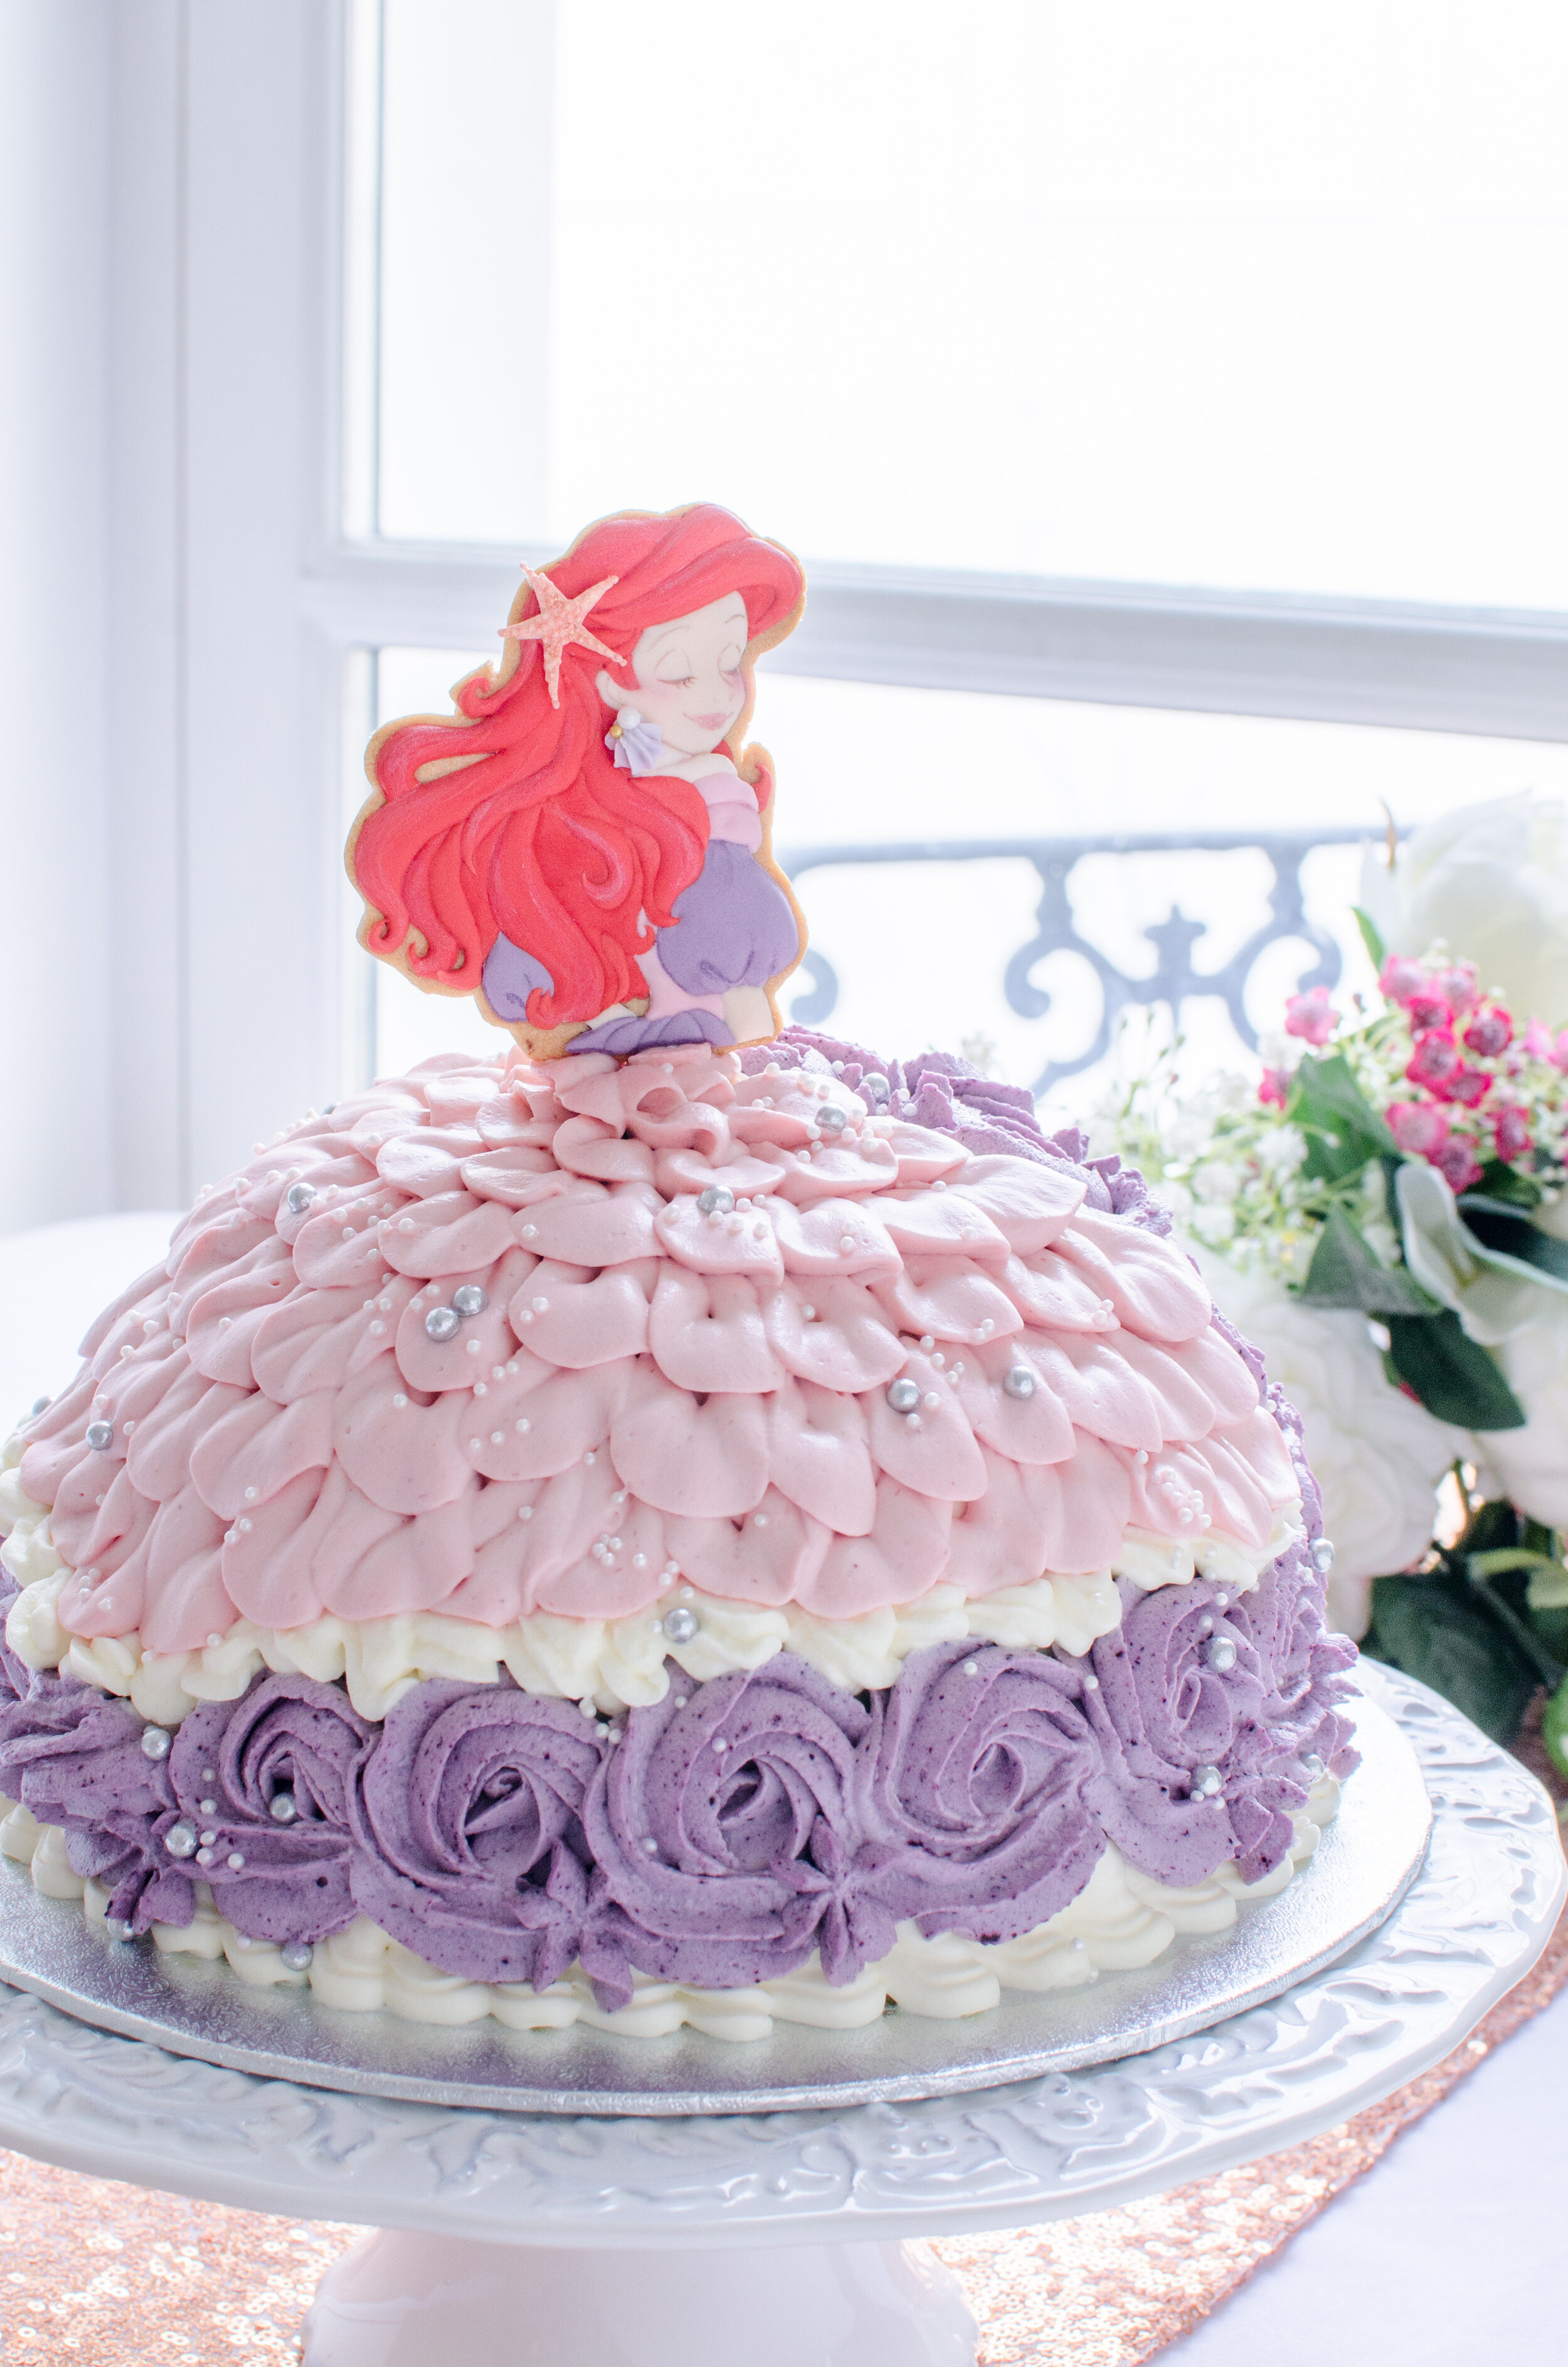 The Romantic Little Mermaid Doll Cake リトルマーメイドのプリンセスケーキ Coucou Natsuha